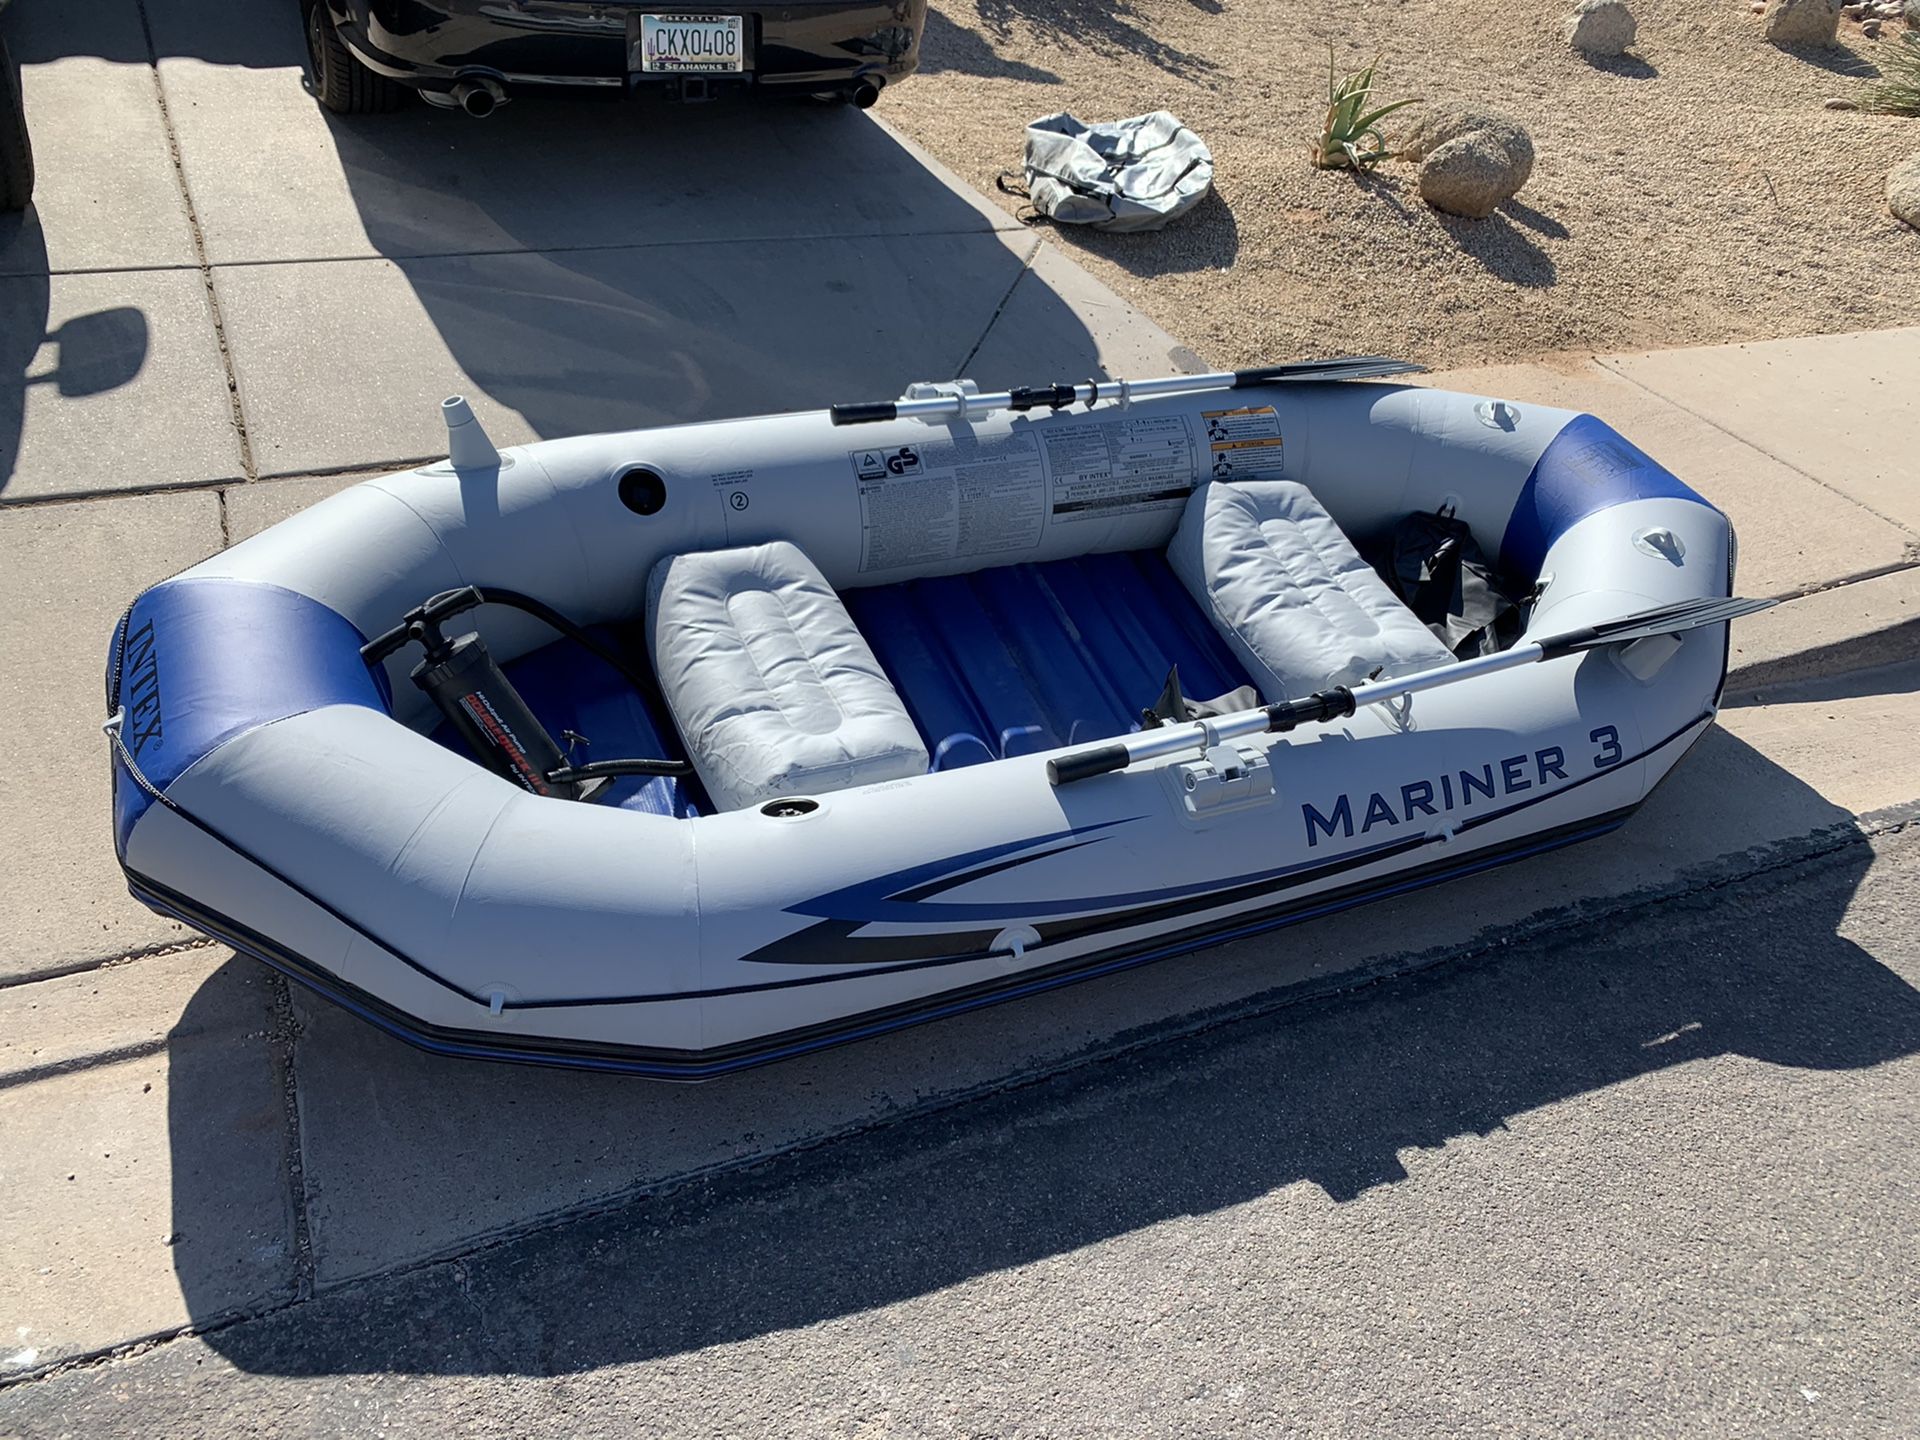 Intex Marine 3 inflatable boat